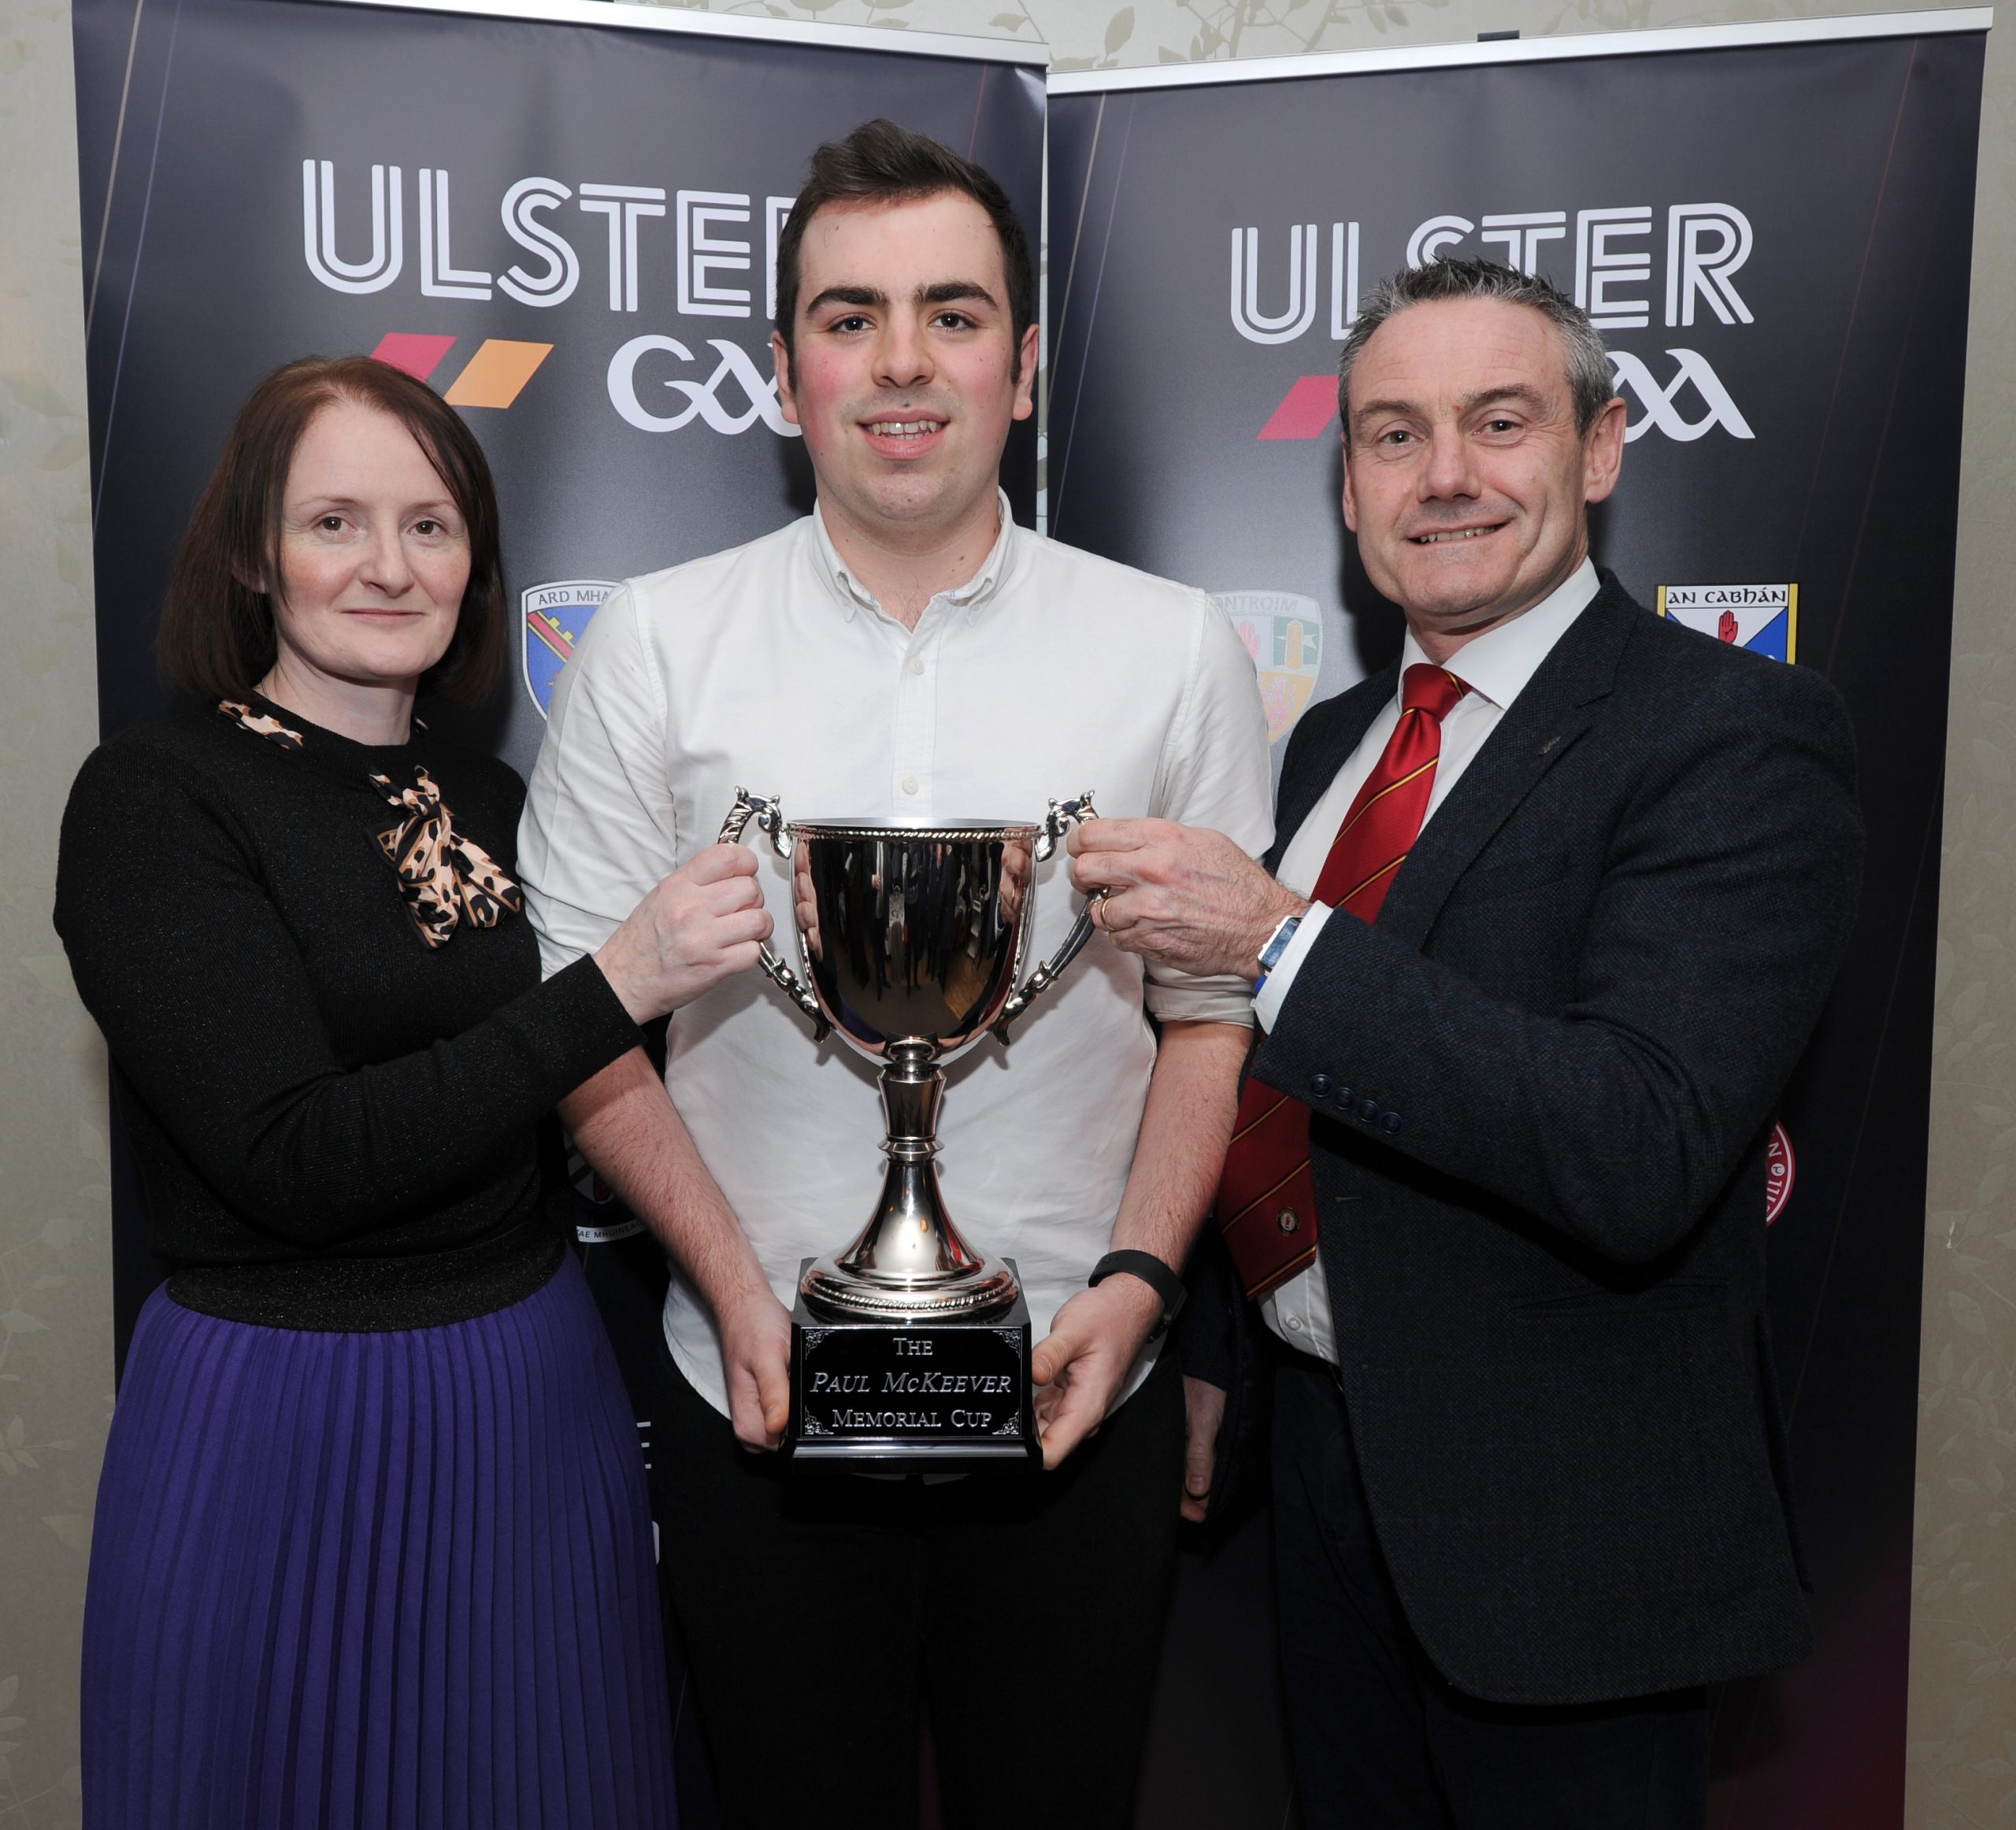 Ulster Referee Awards 2019